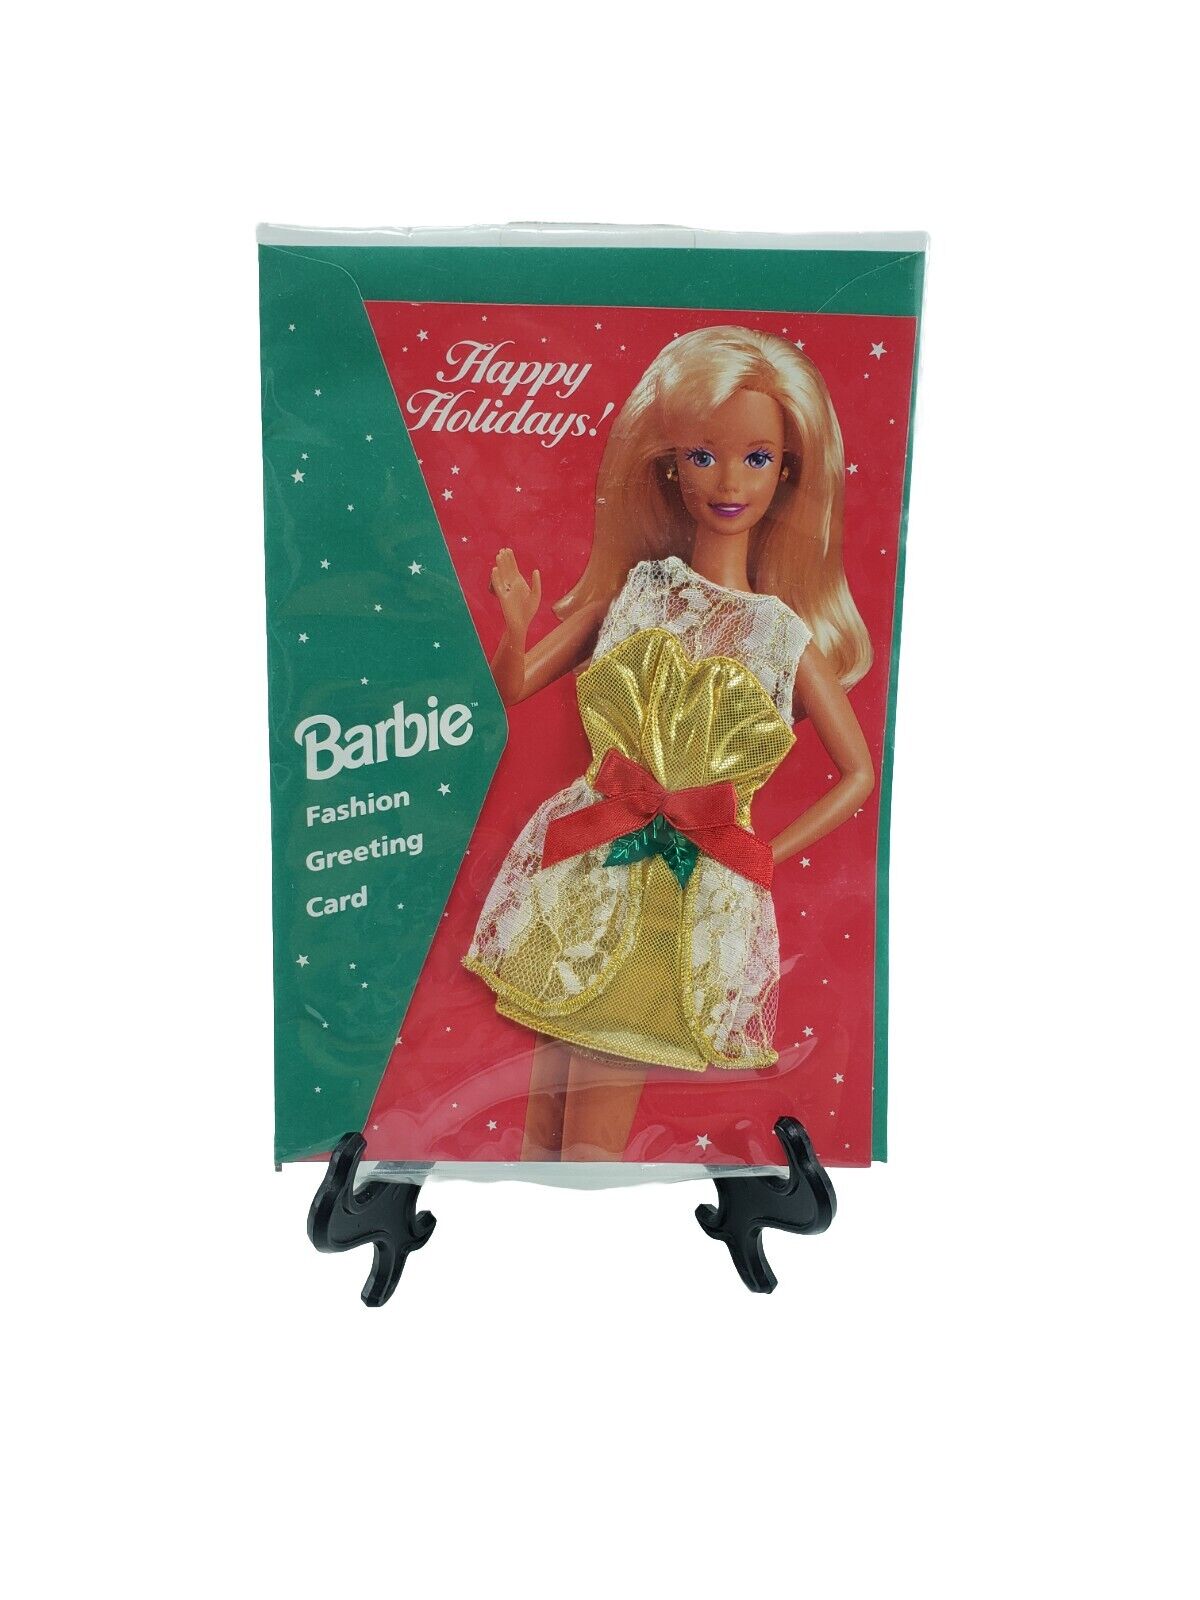 1995 Barbie Fashion Greeting Card Happy Holidays Christmas Mattel New